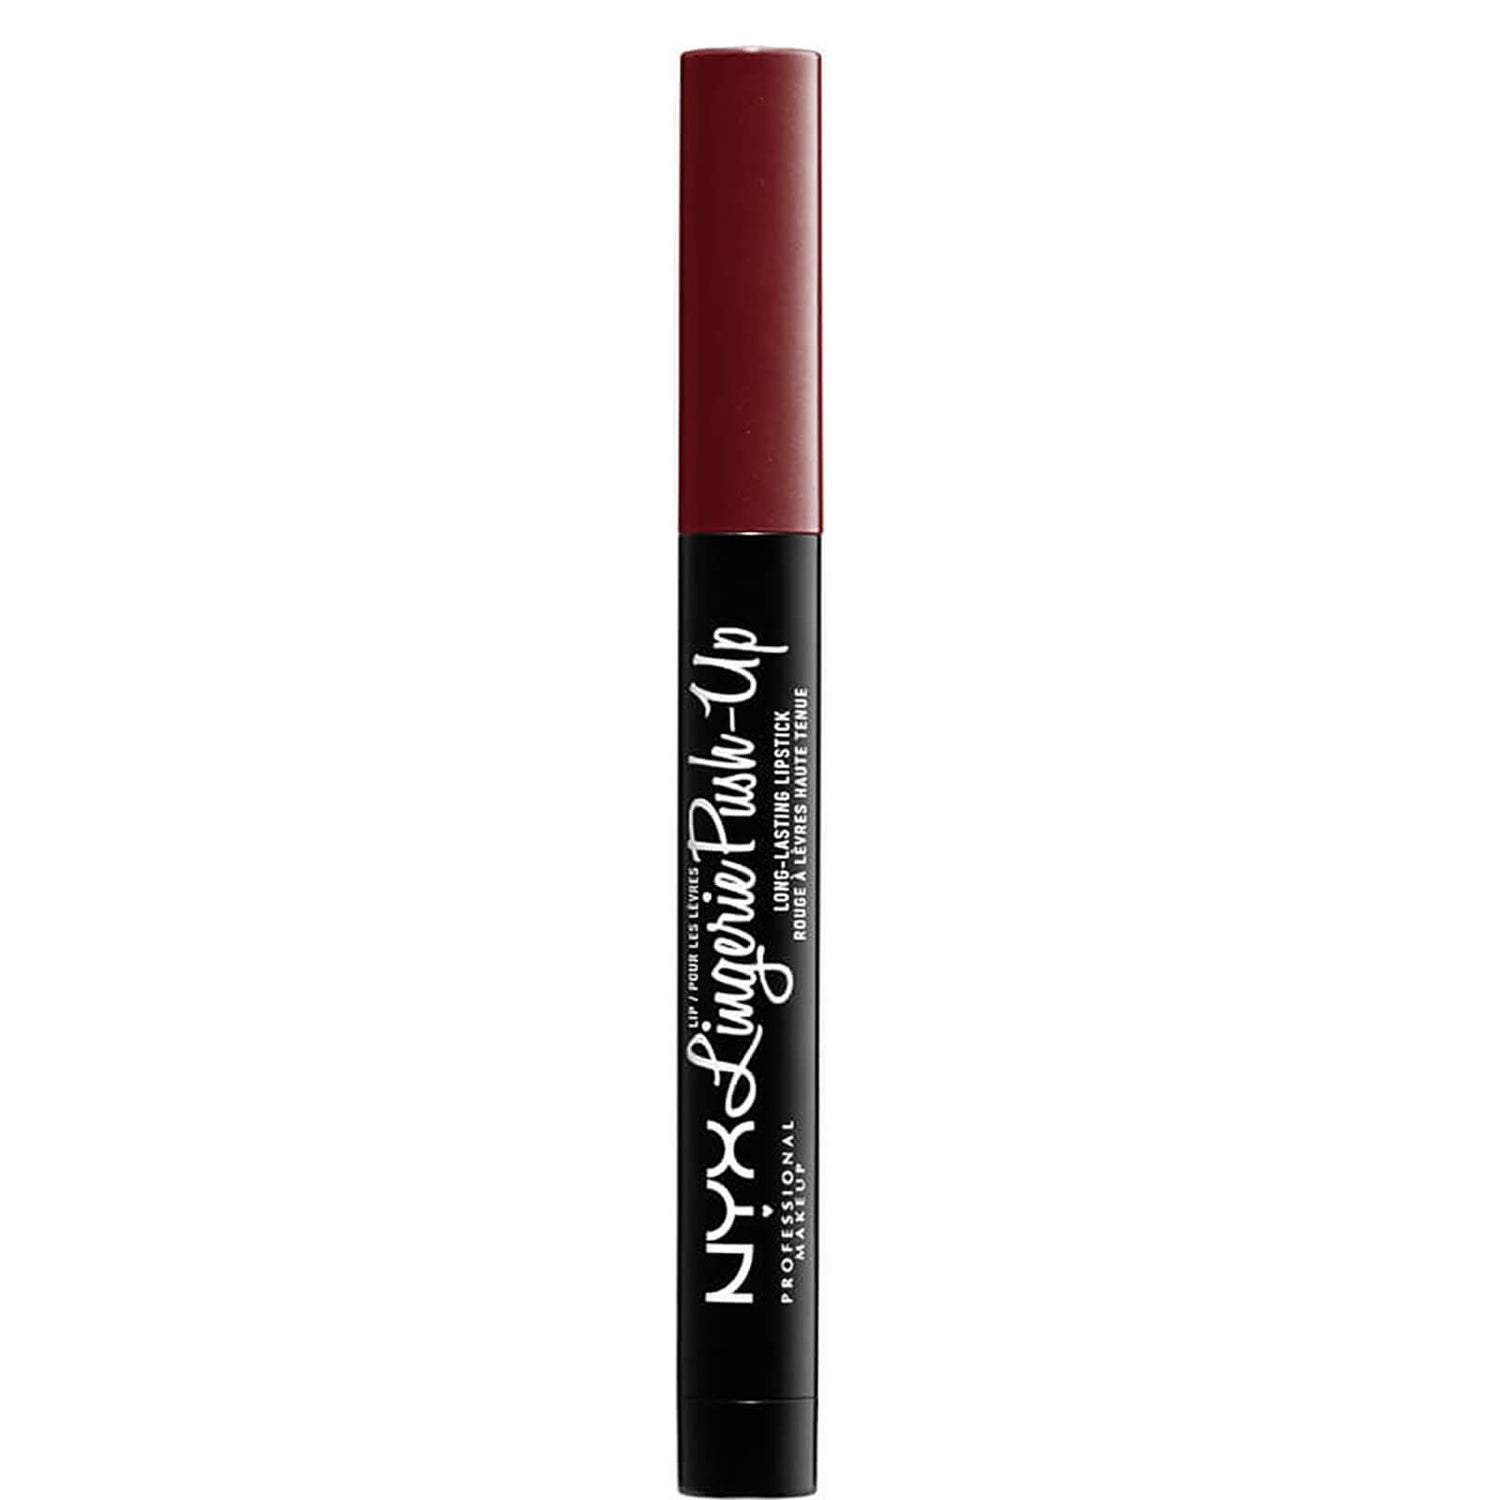 NYX Professional Makeup Lip Lingerie Matte Lipstick 1.5g (Various Shades)